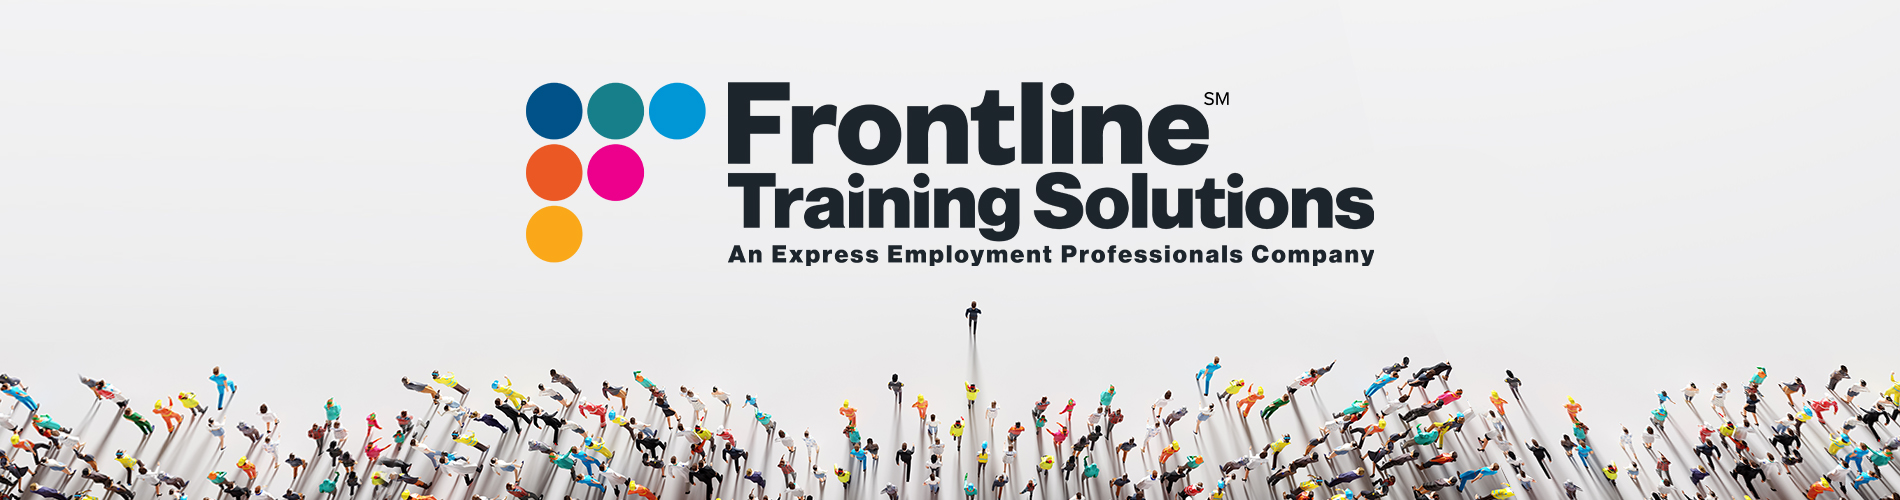 Frontline Training Solutions